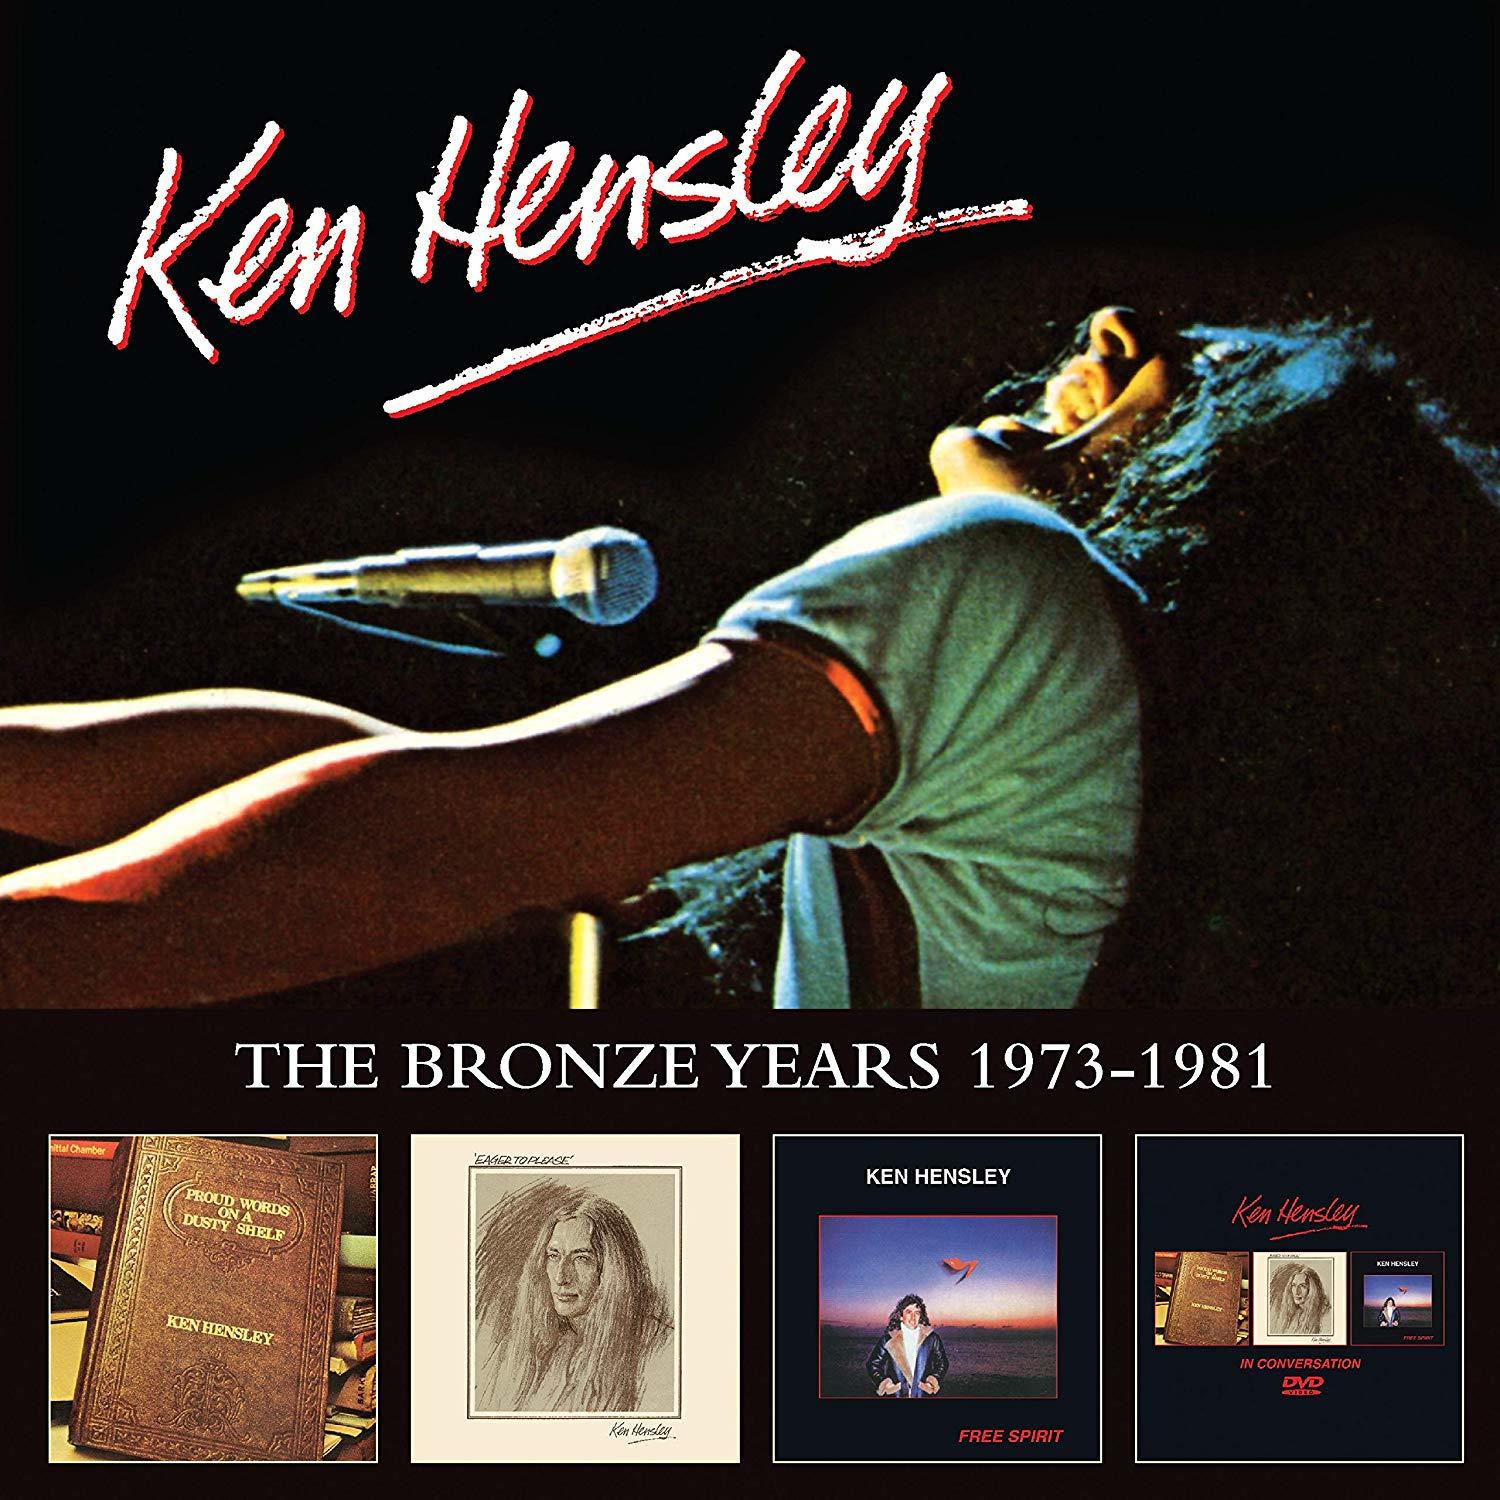 Ken Hensley - Box) Years DVD (CD The Bronze 1973-1981 Video) - (3CD/1DVD 